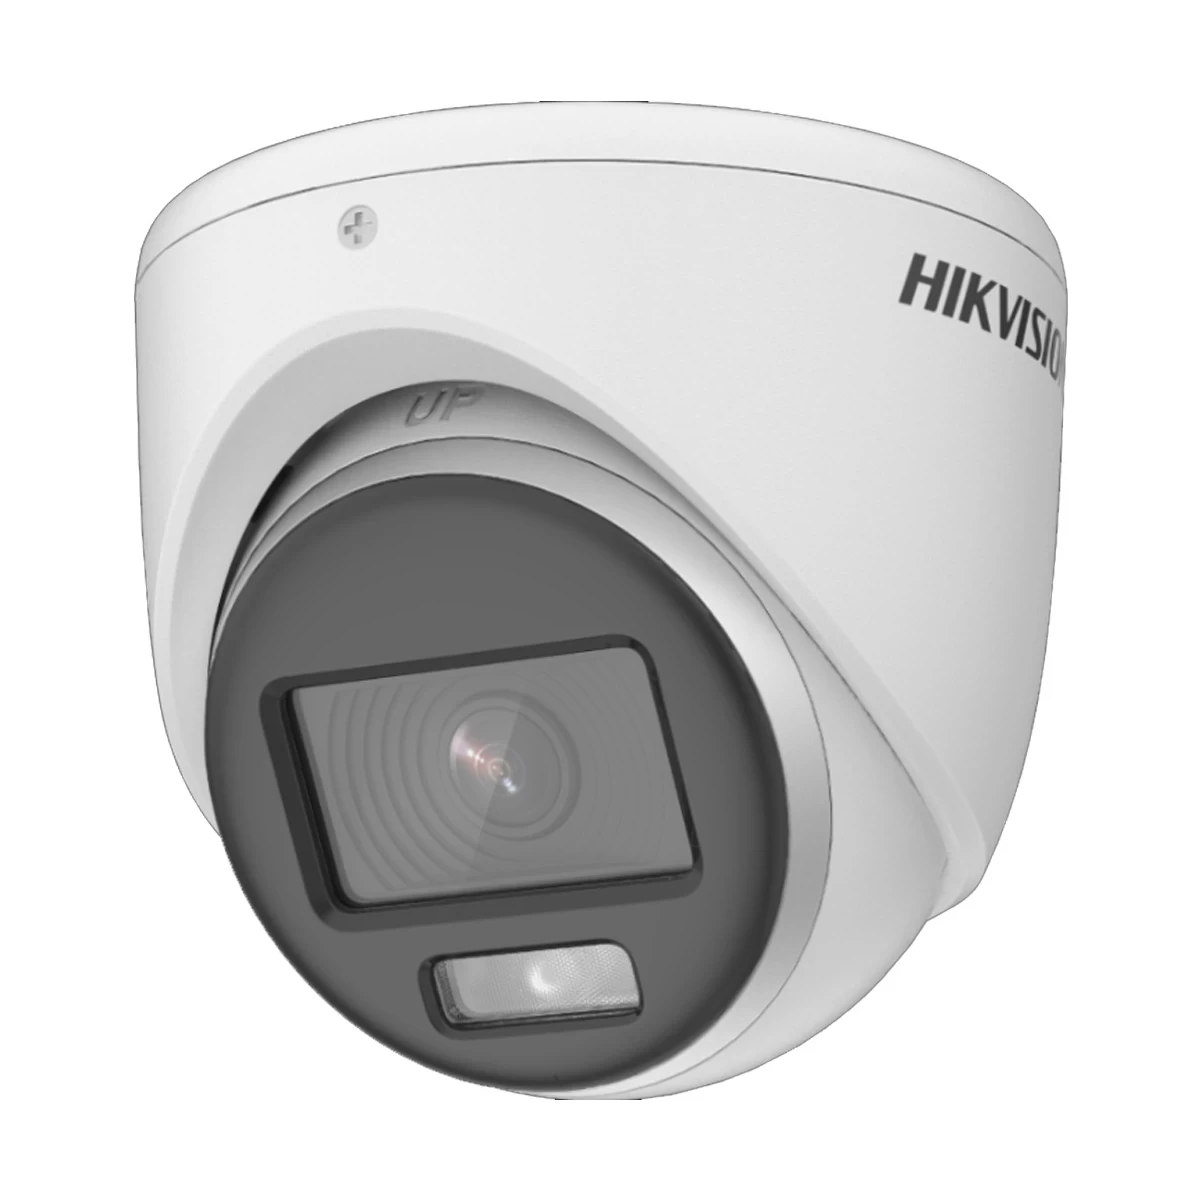 HIKVISION CCTV HD CAMERA DS-2CE70DF0T-MFS 2.8MM 2MP